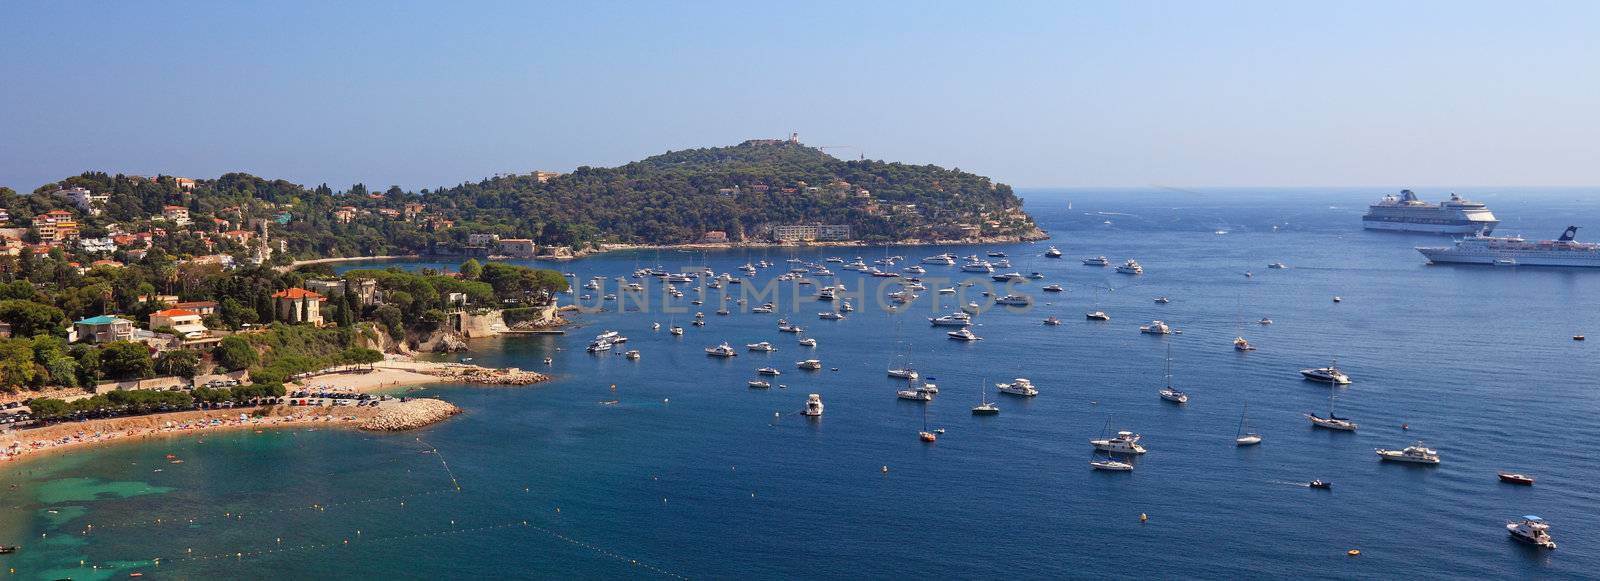 Panoramic view of bay near Nice city. Many sail boats, cruise sh by borodaev